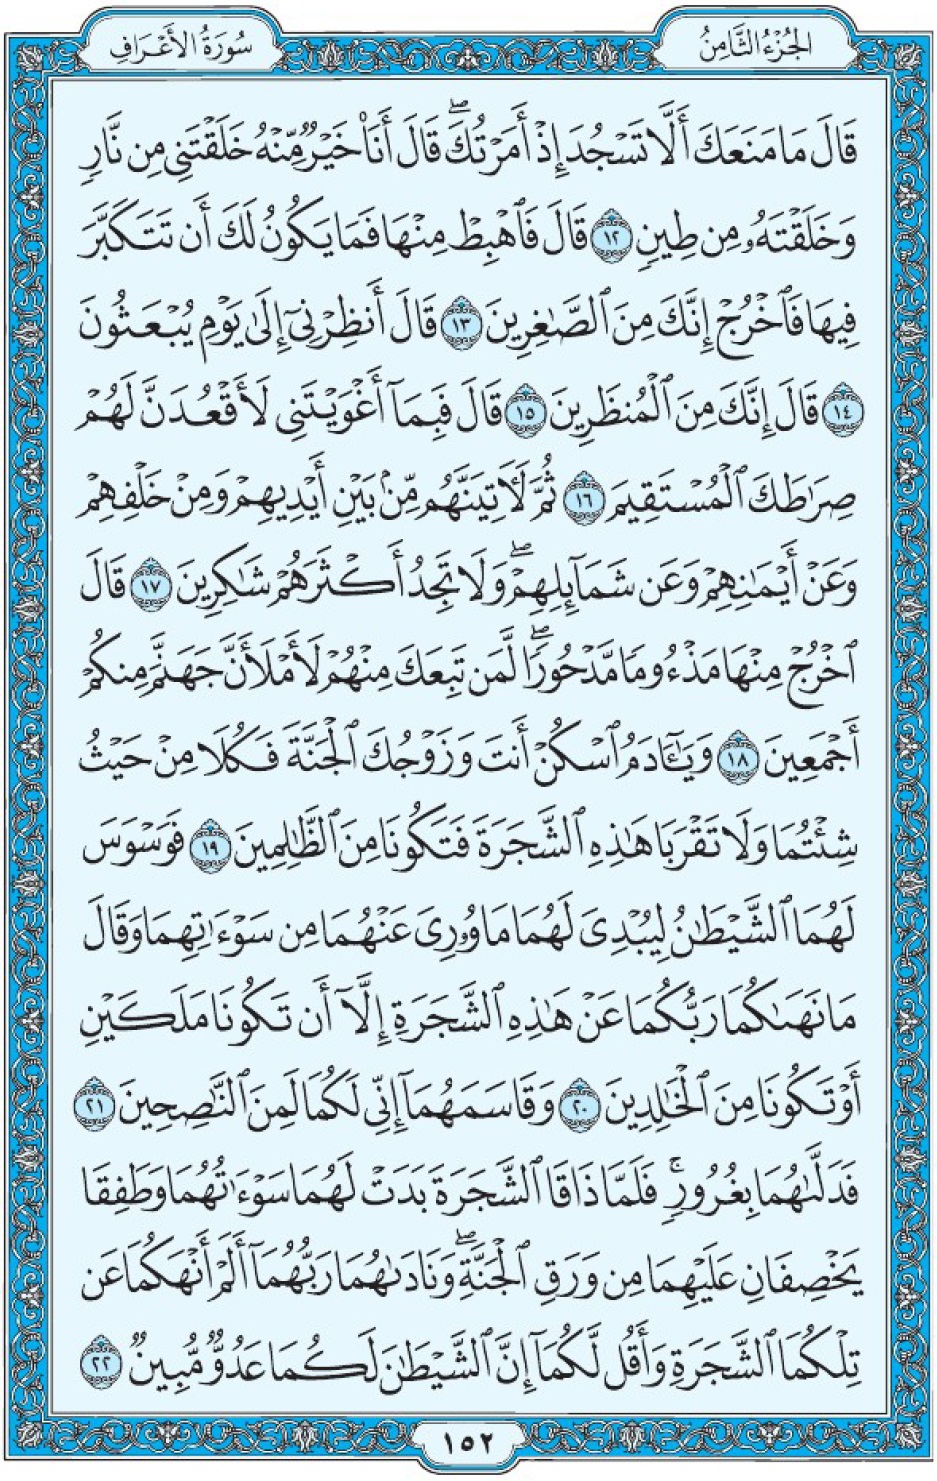 Коран Мединский мусхаф страница 152, Аль-А‘раф, аят 12-22